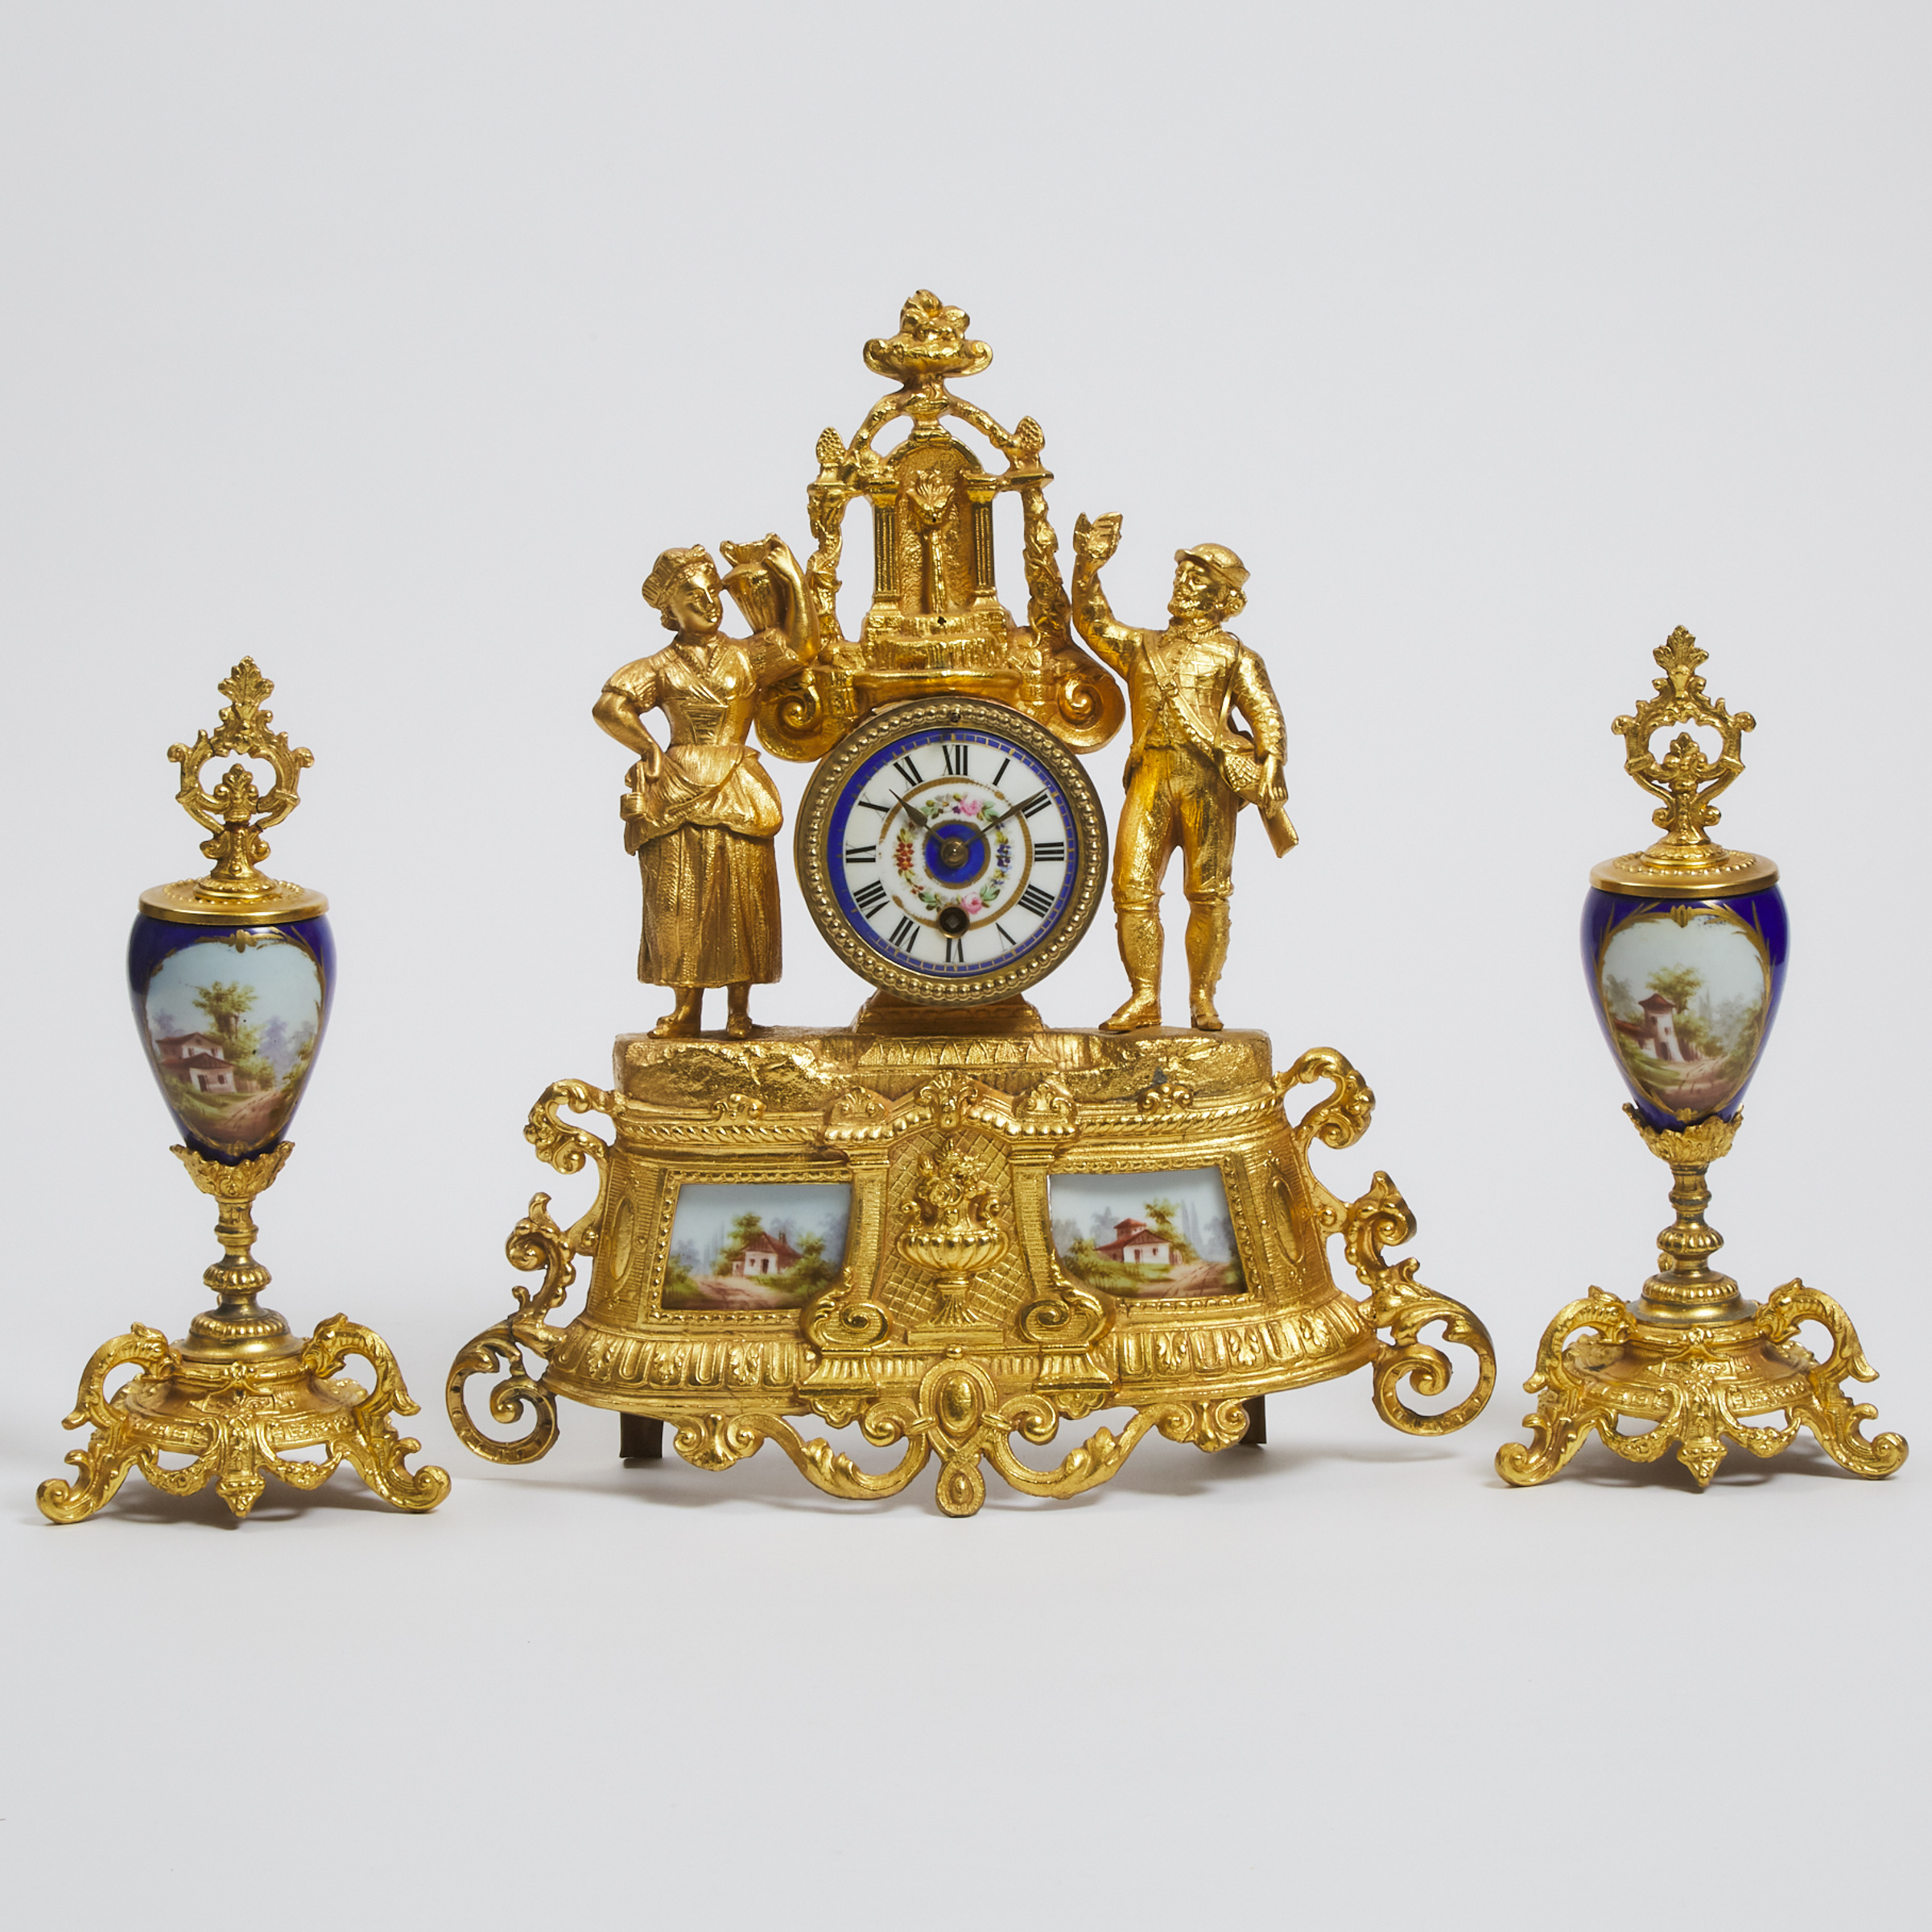 Three Piece Porcelain Mounted Gilt Metal French Clock Garniture, mid 19th century